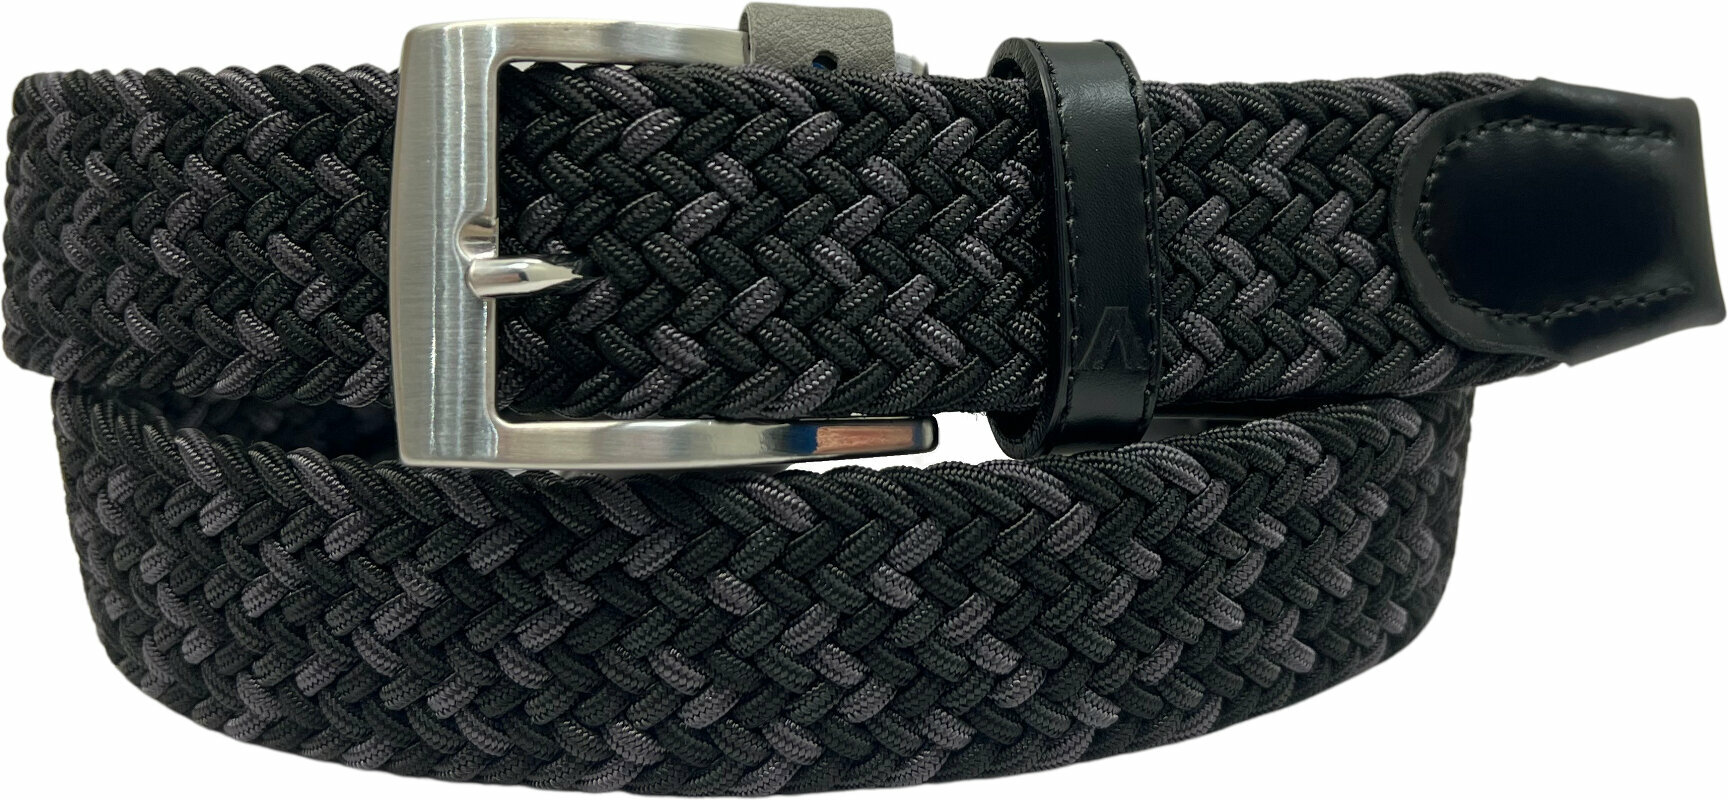 Opasok Alberto Gürtel Multicolor Braided Belt Black/Grey 95